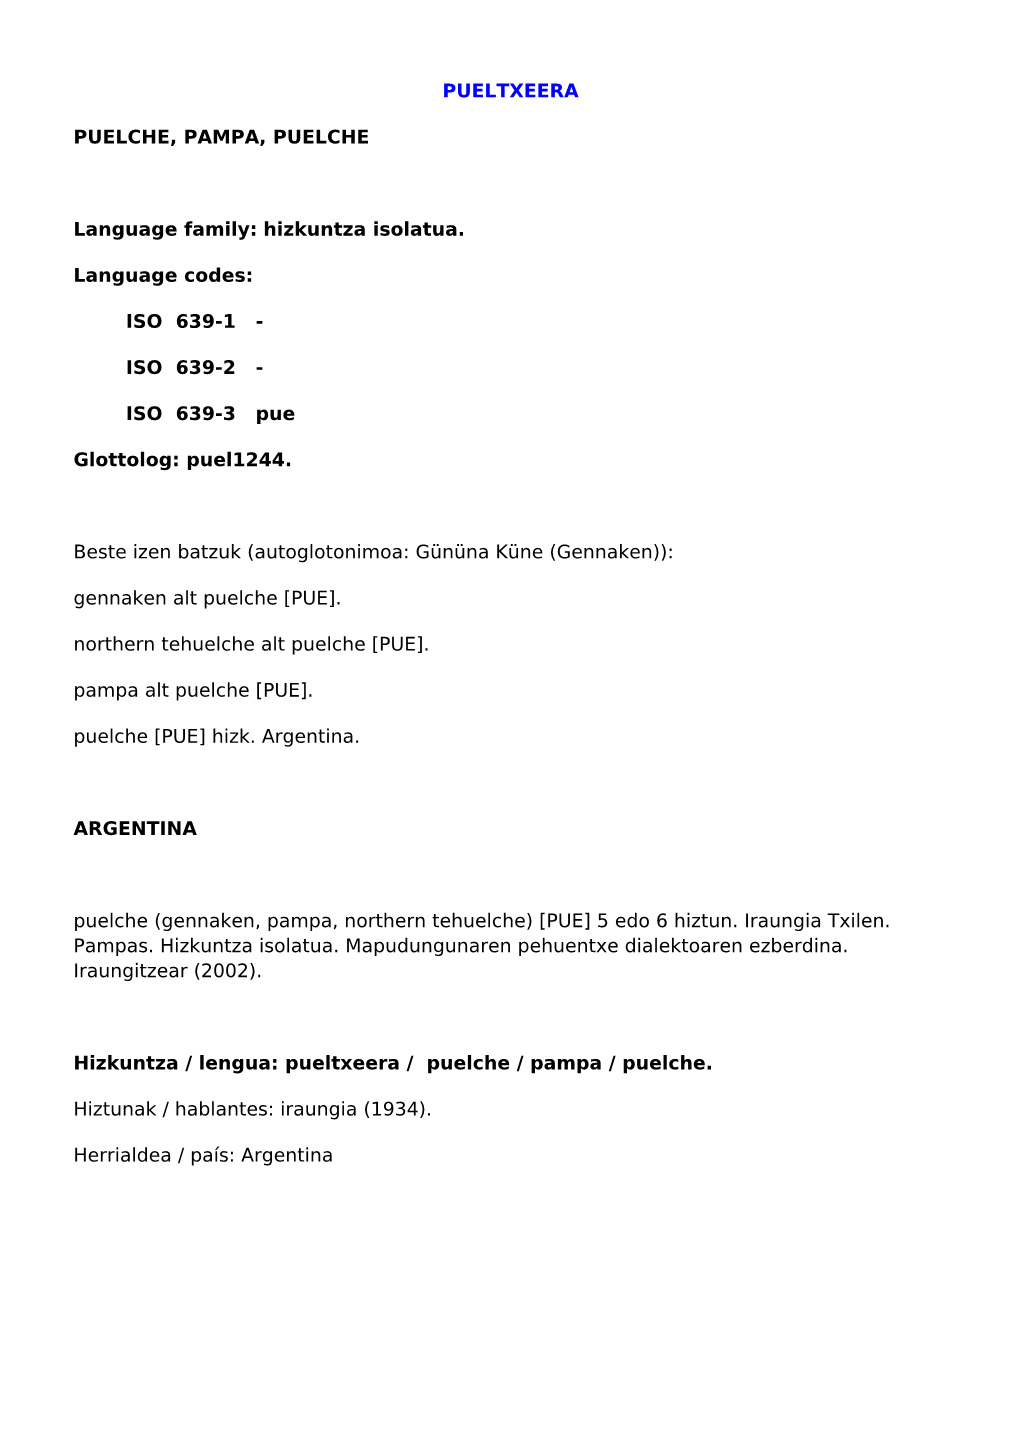 PUELTXEERA PUELCHE, PAMPA, PUELCHE Language Family: Hizkuntza Isolatua. Language Codes: ISO 639-1